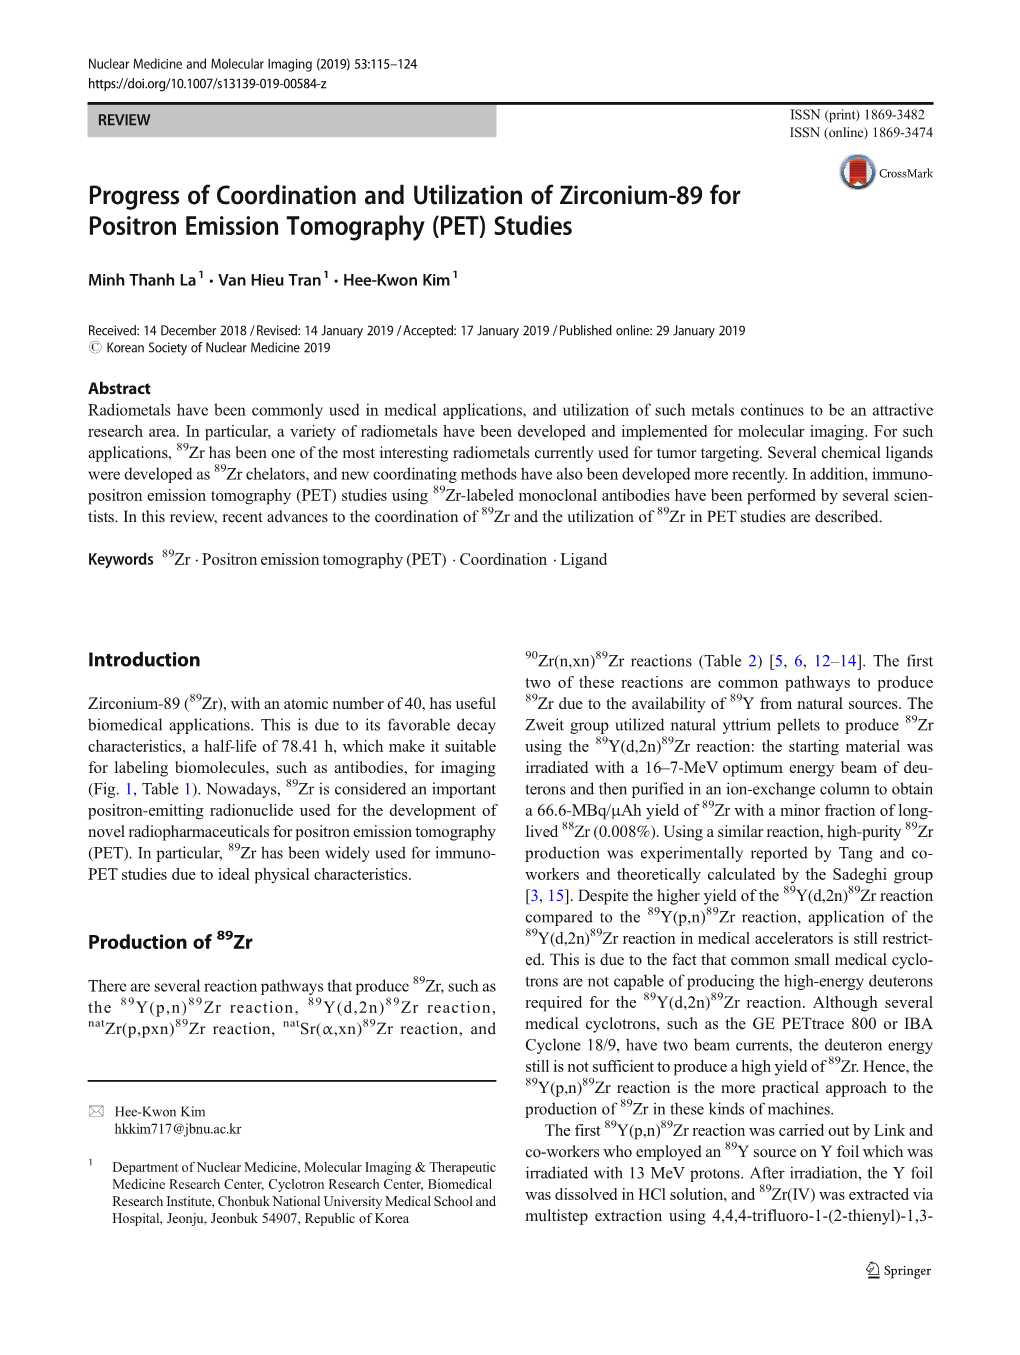 Progress of Coordination and Utilization of Zirconium-89 for Positron Emission Tomography (PET) Studies